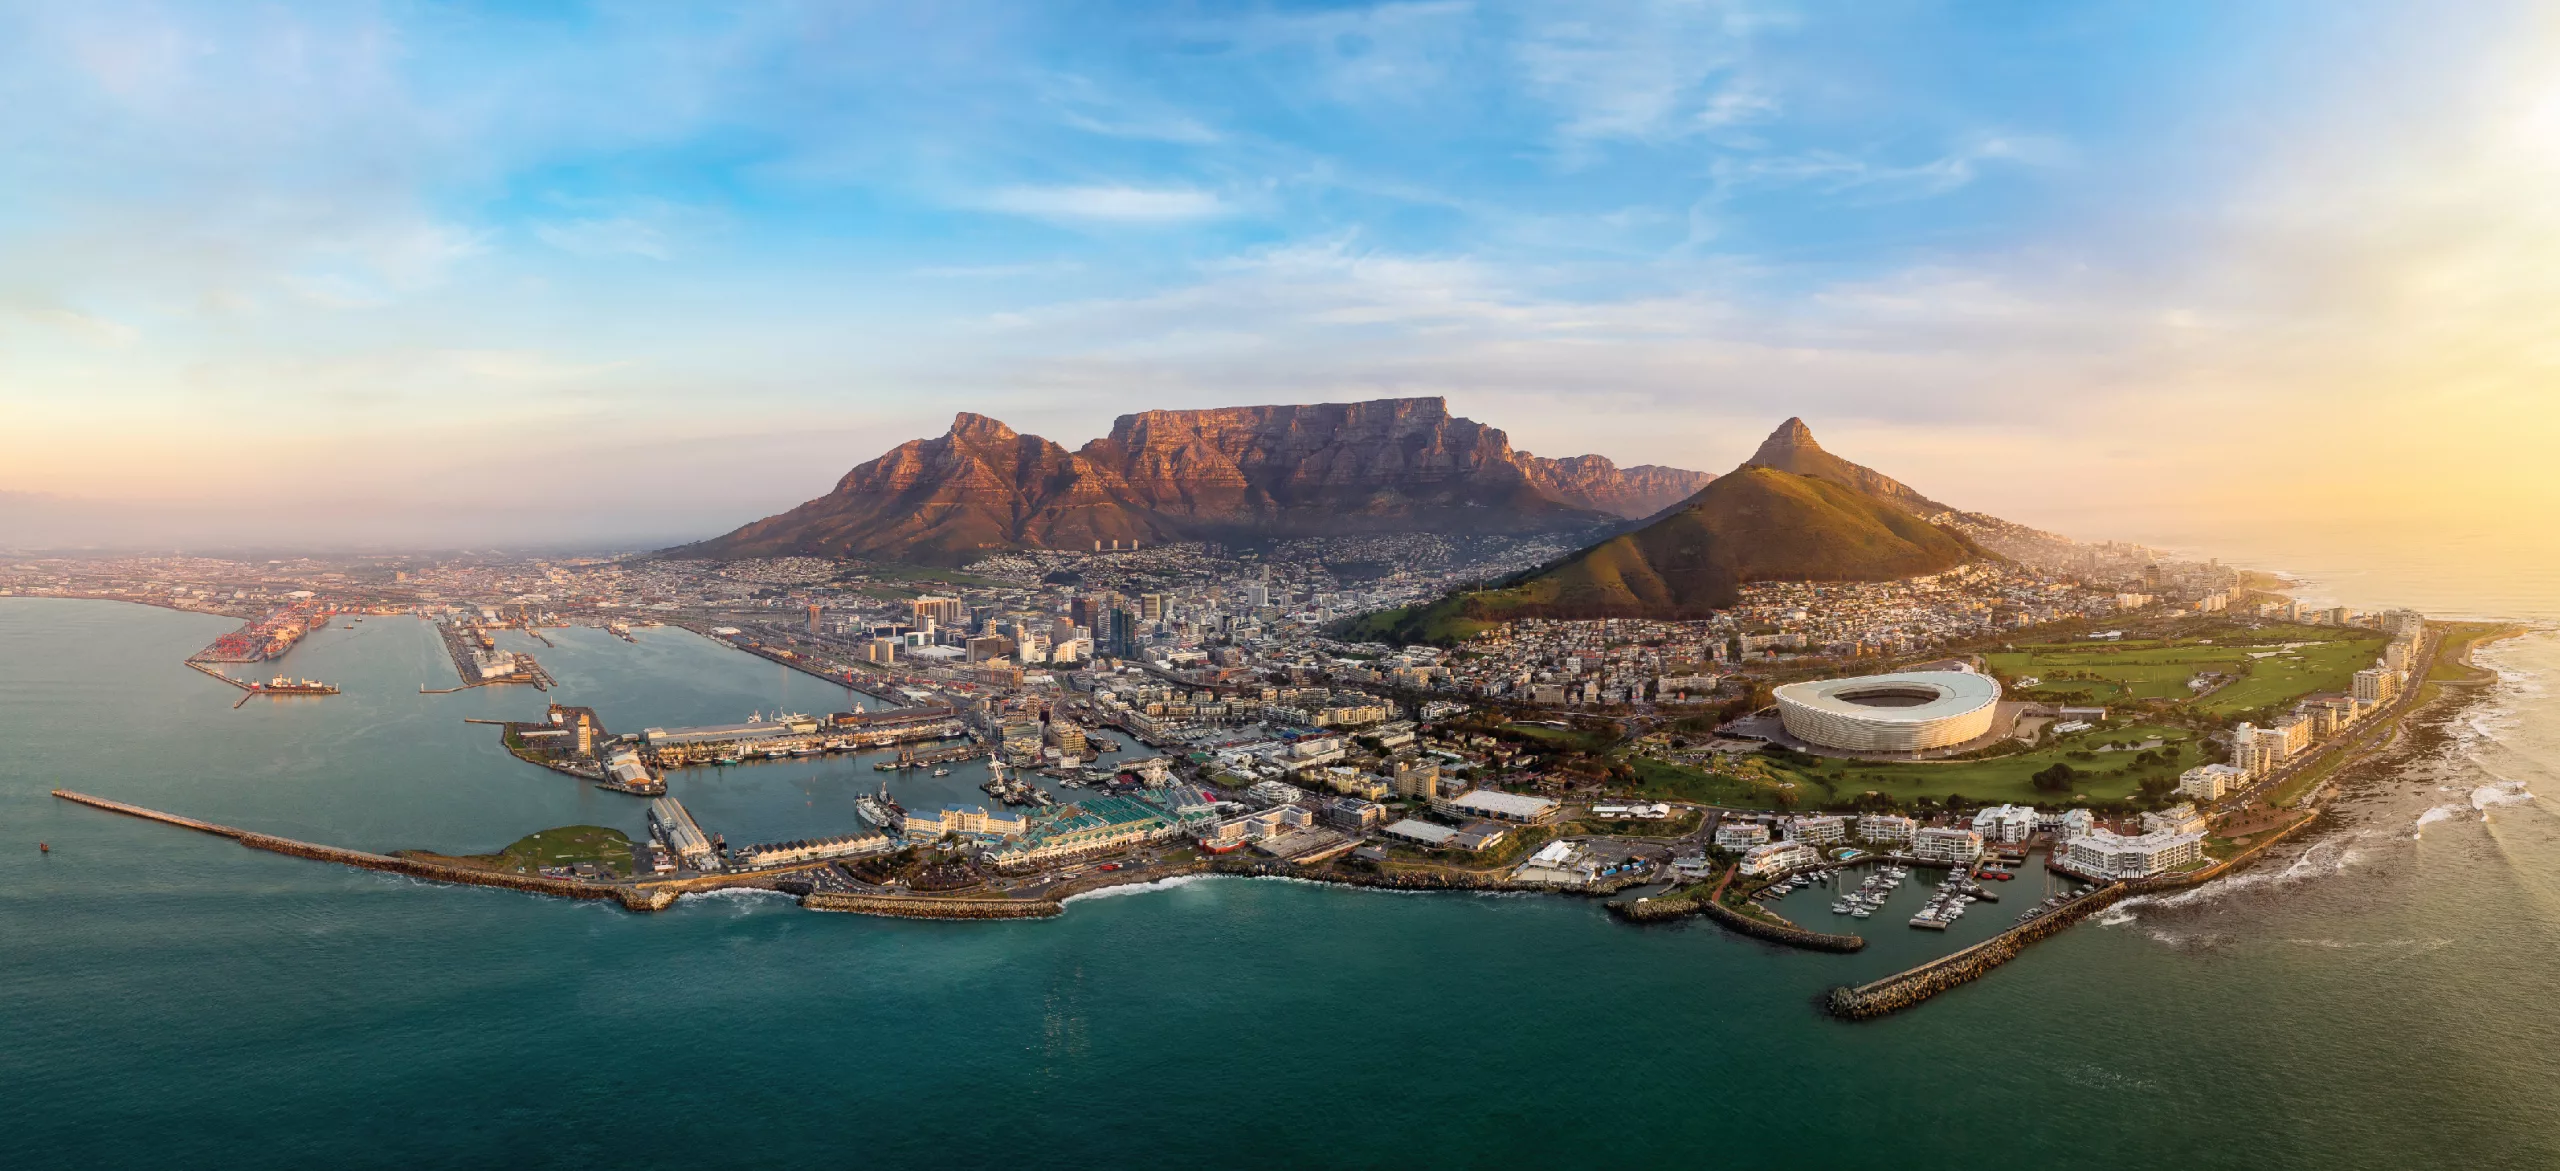 South Africa – 3 Hidden Gems That Are Breath-Taking & Spellbinding!